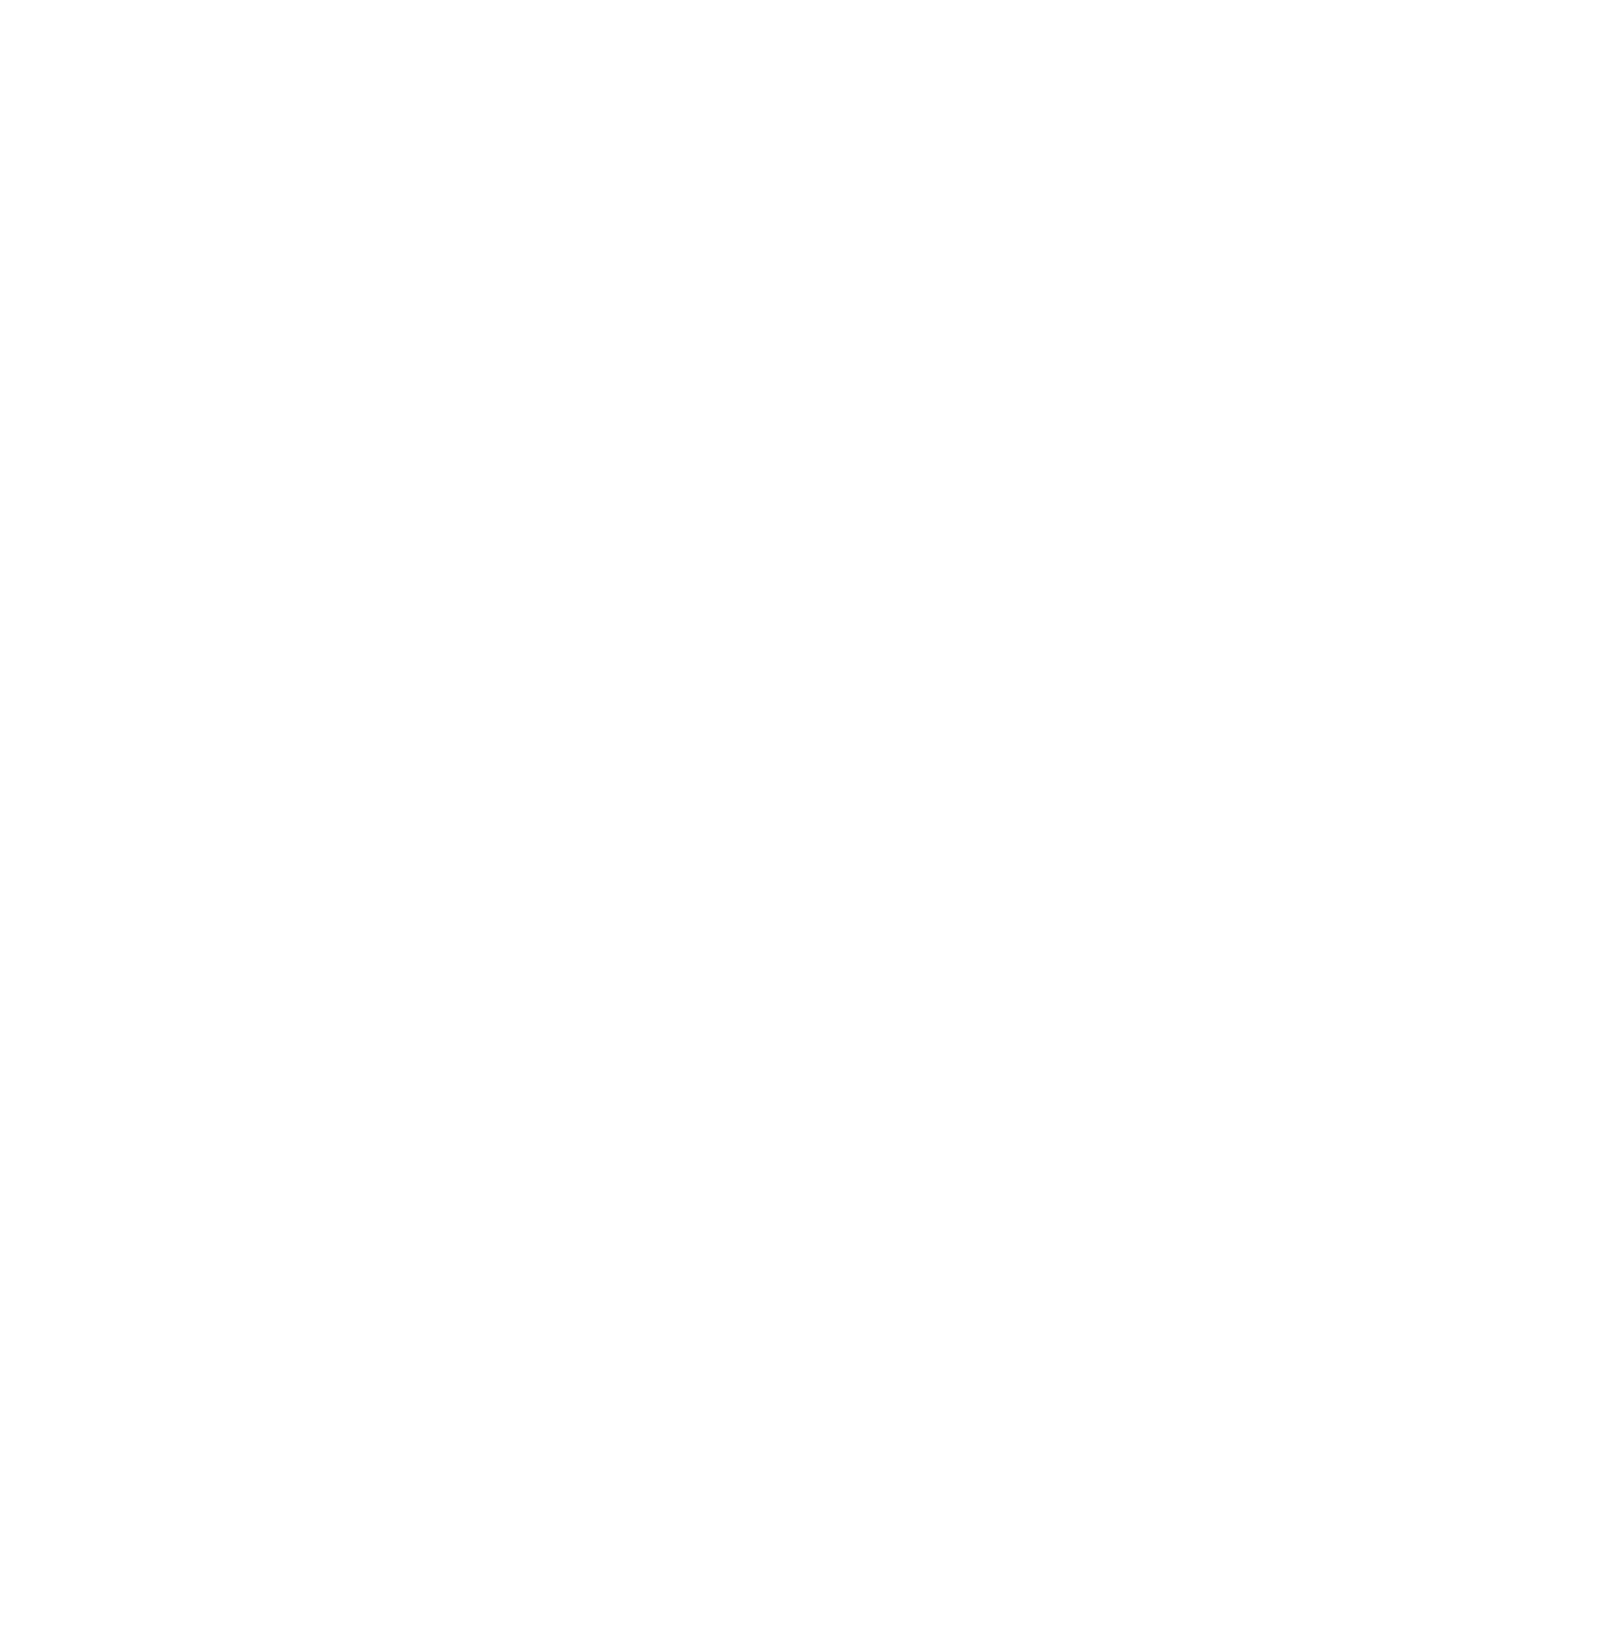 smm3d, маркетинг, маркетинговое агентства